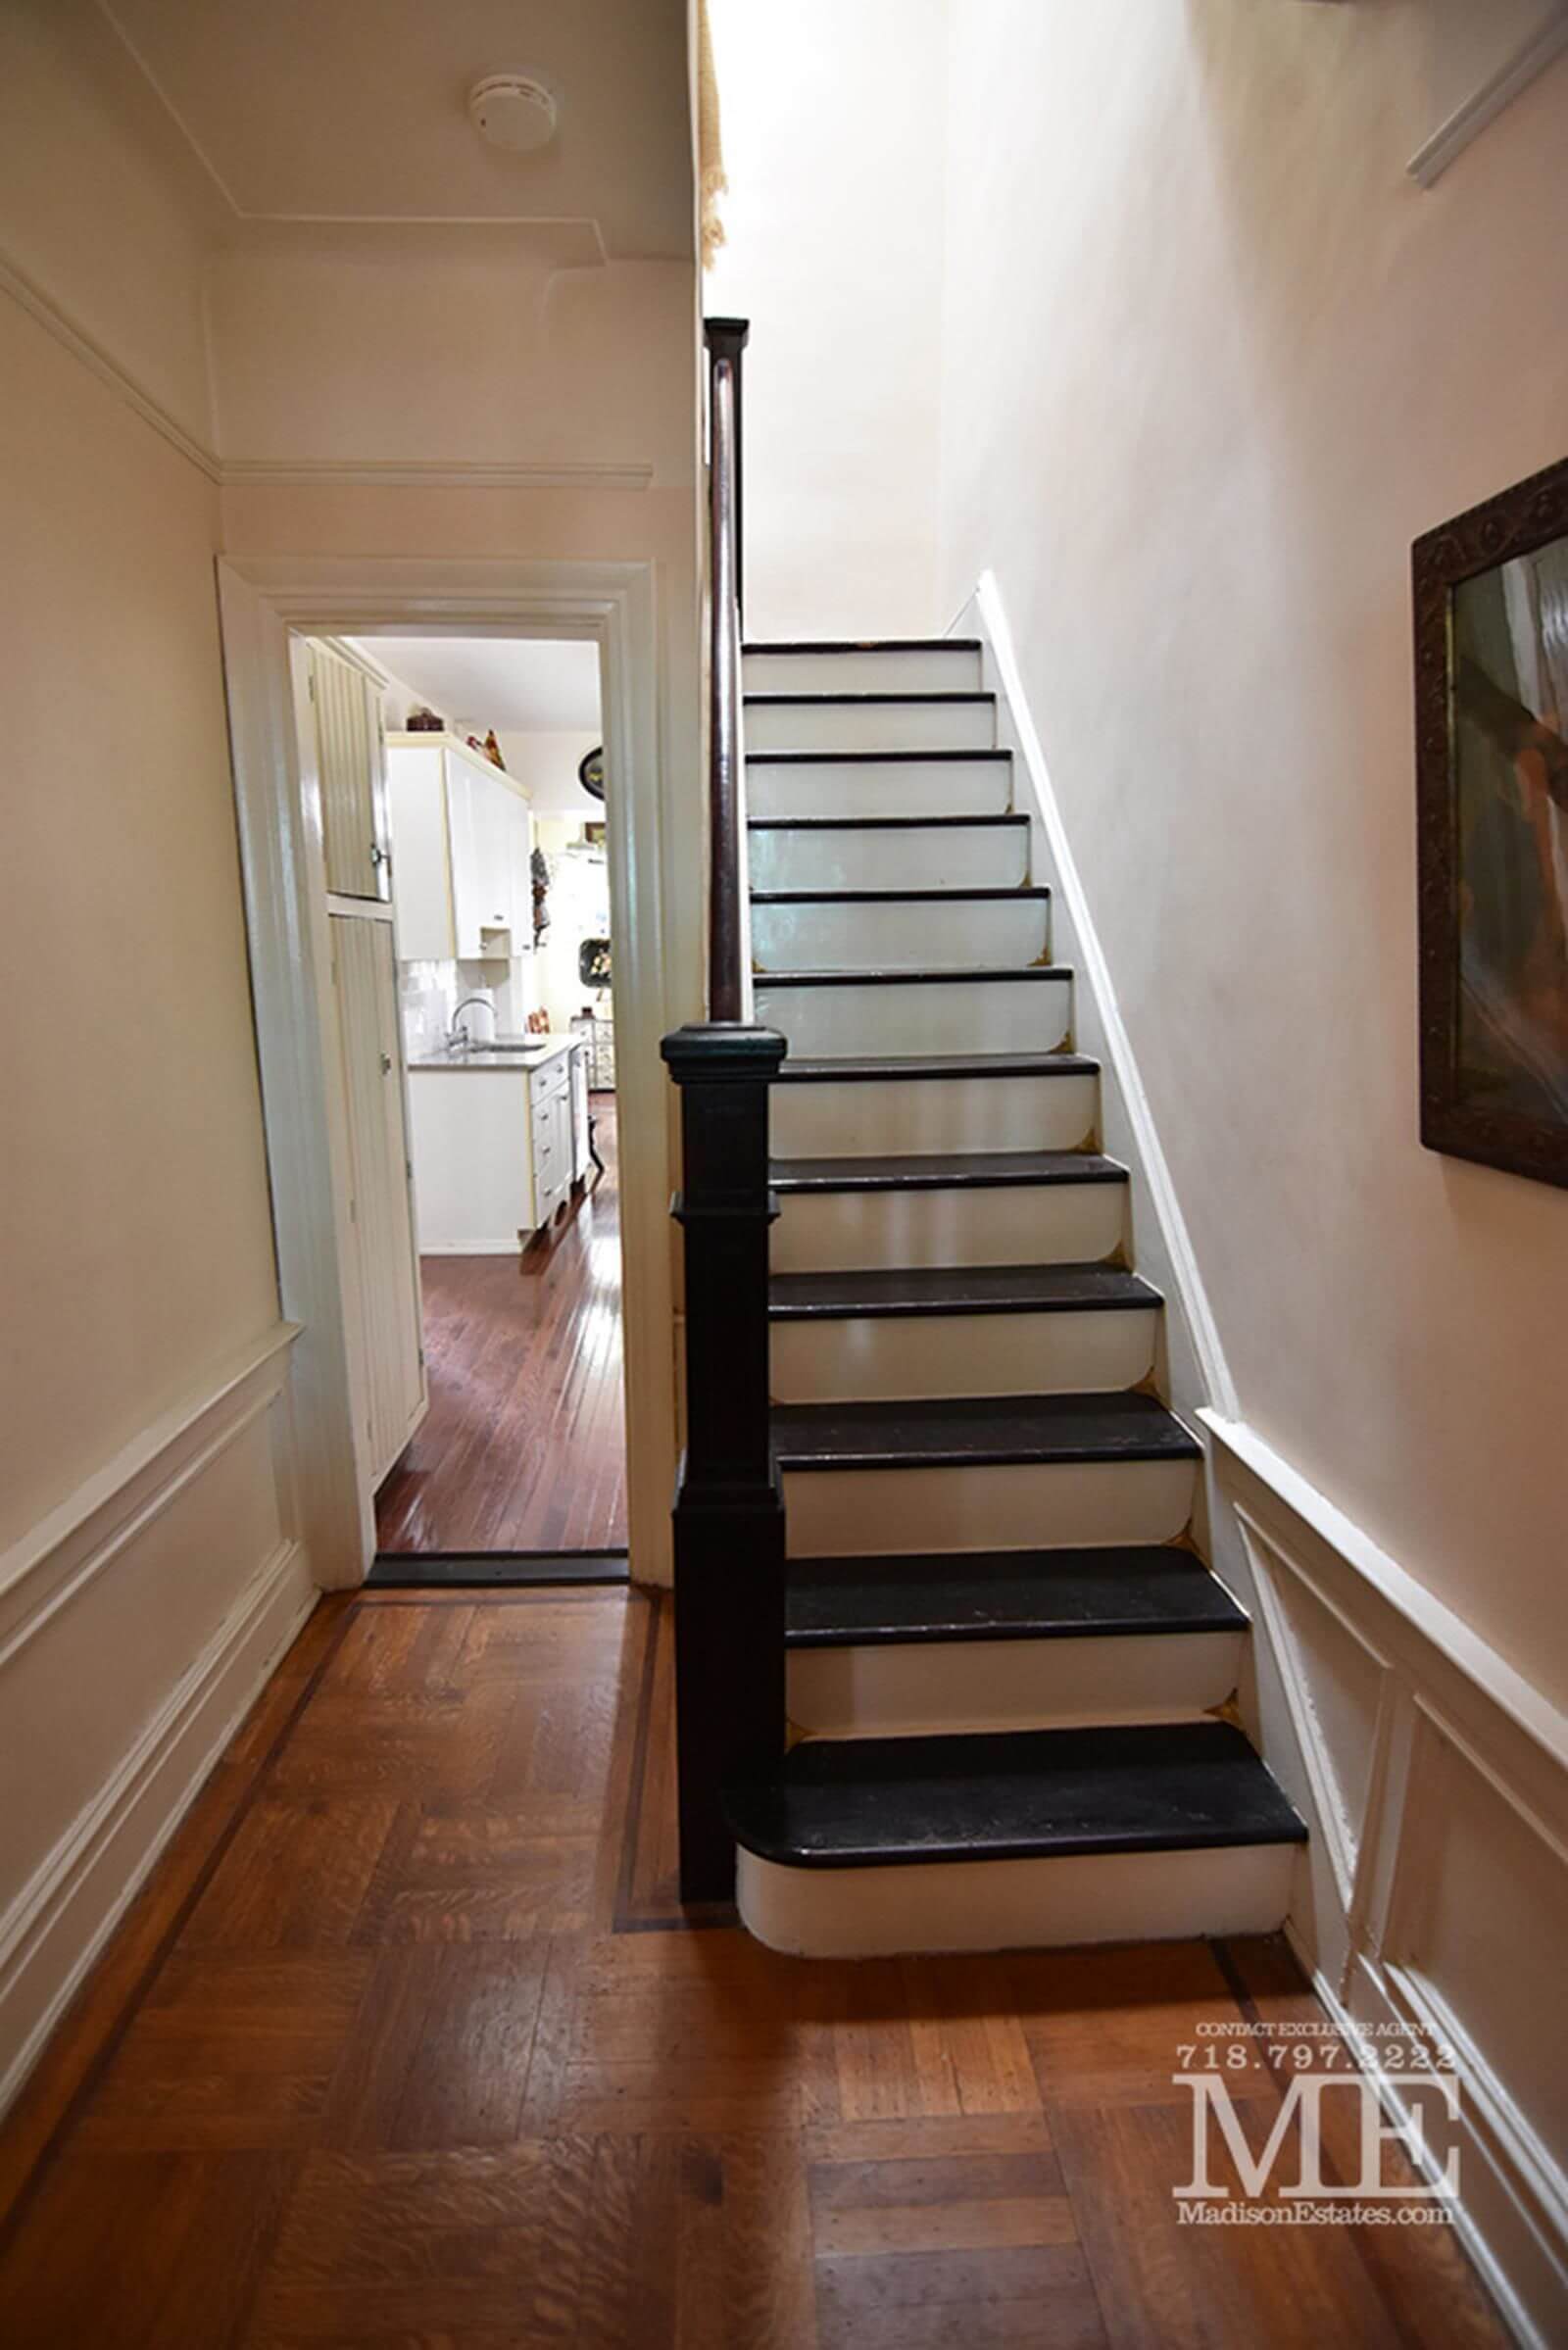 brooklyn-homes-for-sale-bay-ridge-158-73rd-street-stair